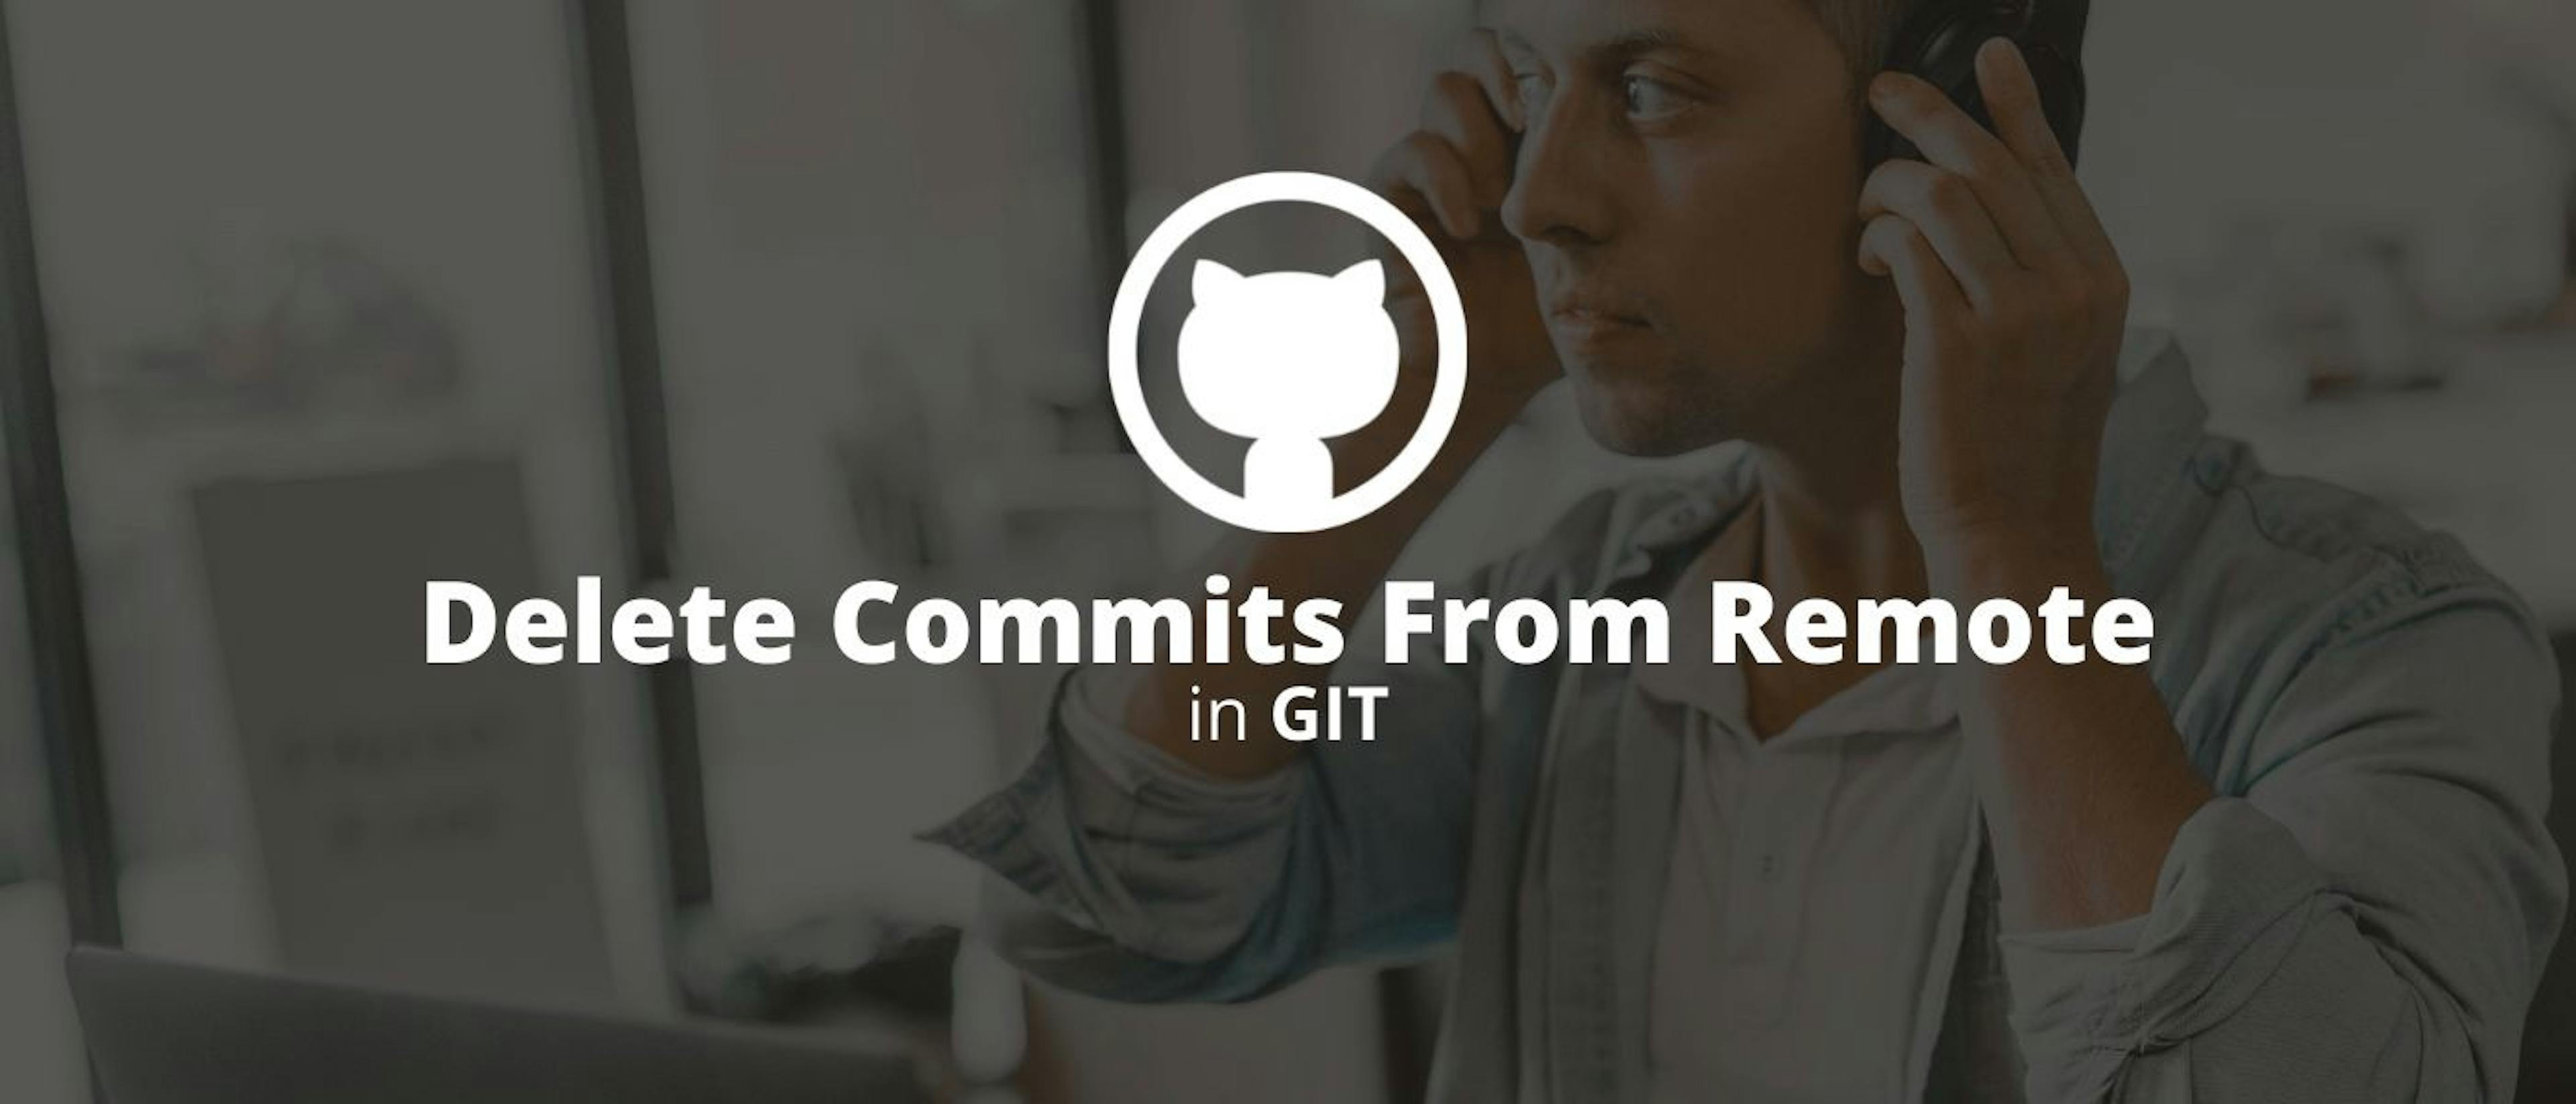 featured image - Cách xóa cam kết từ xa trong Git